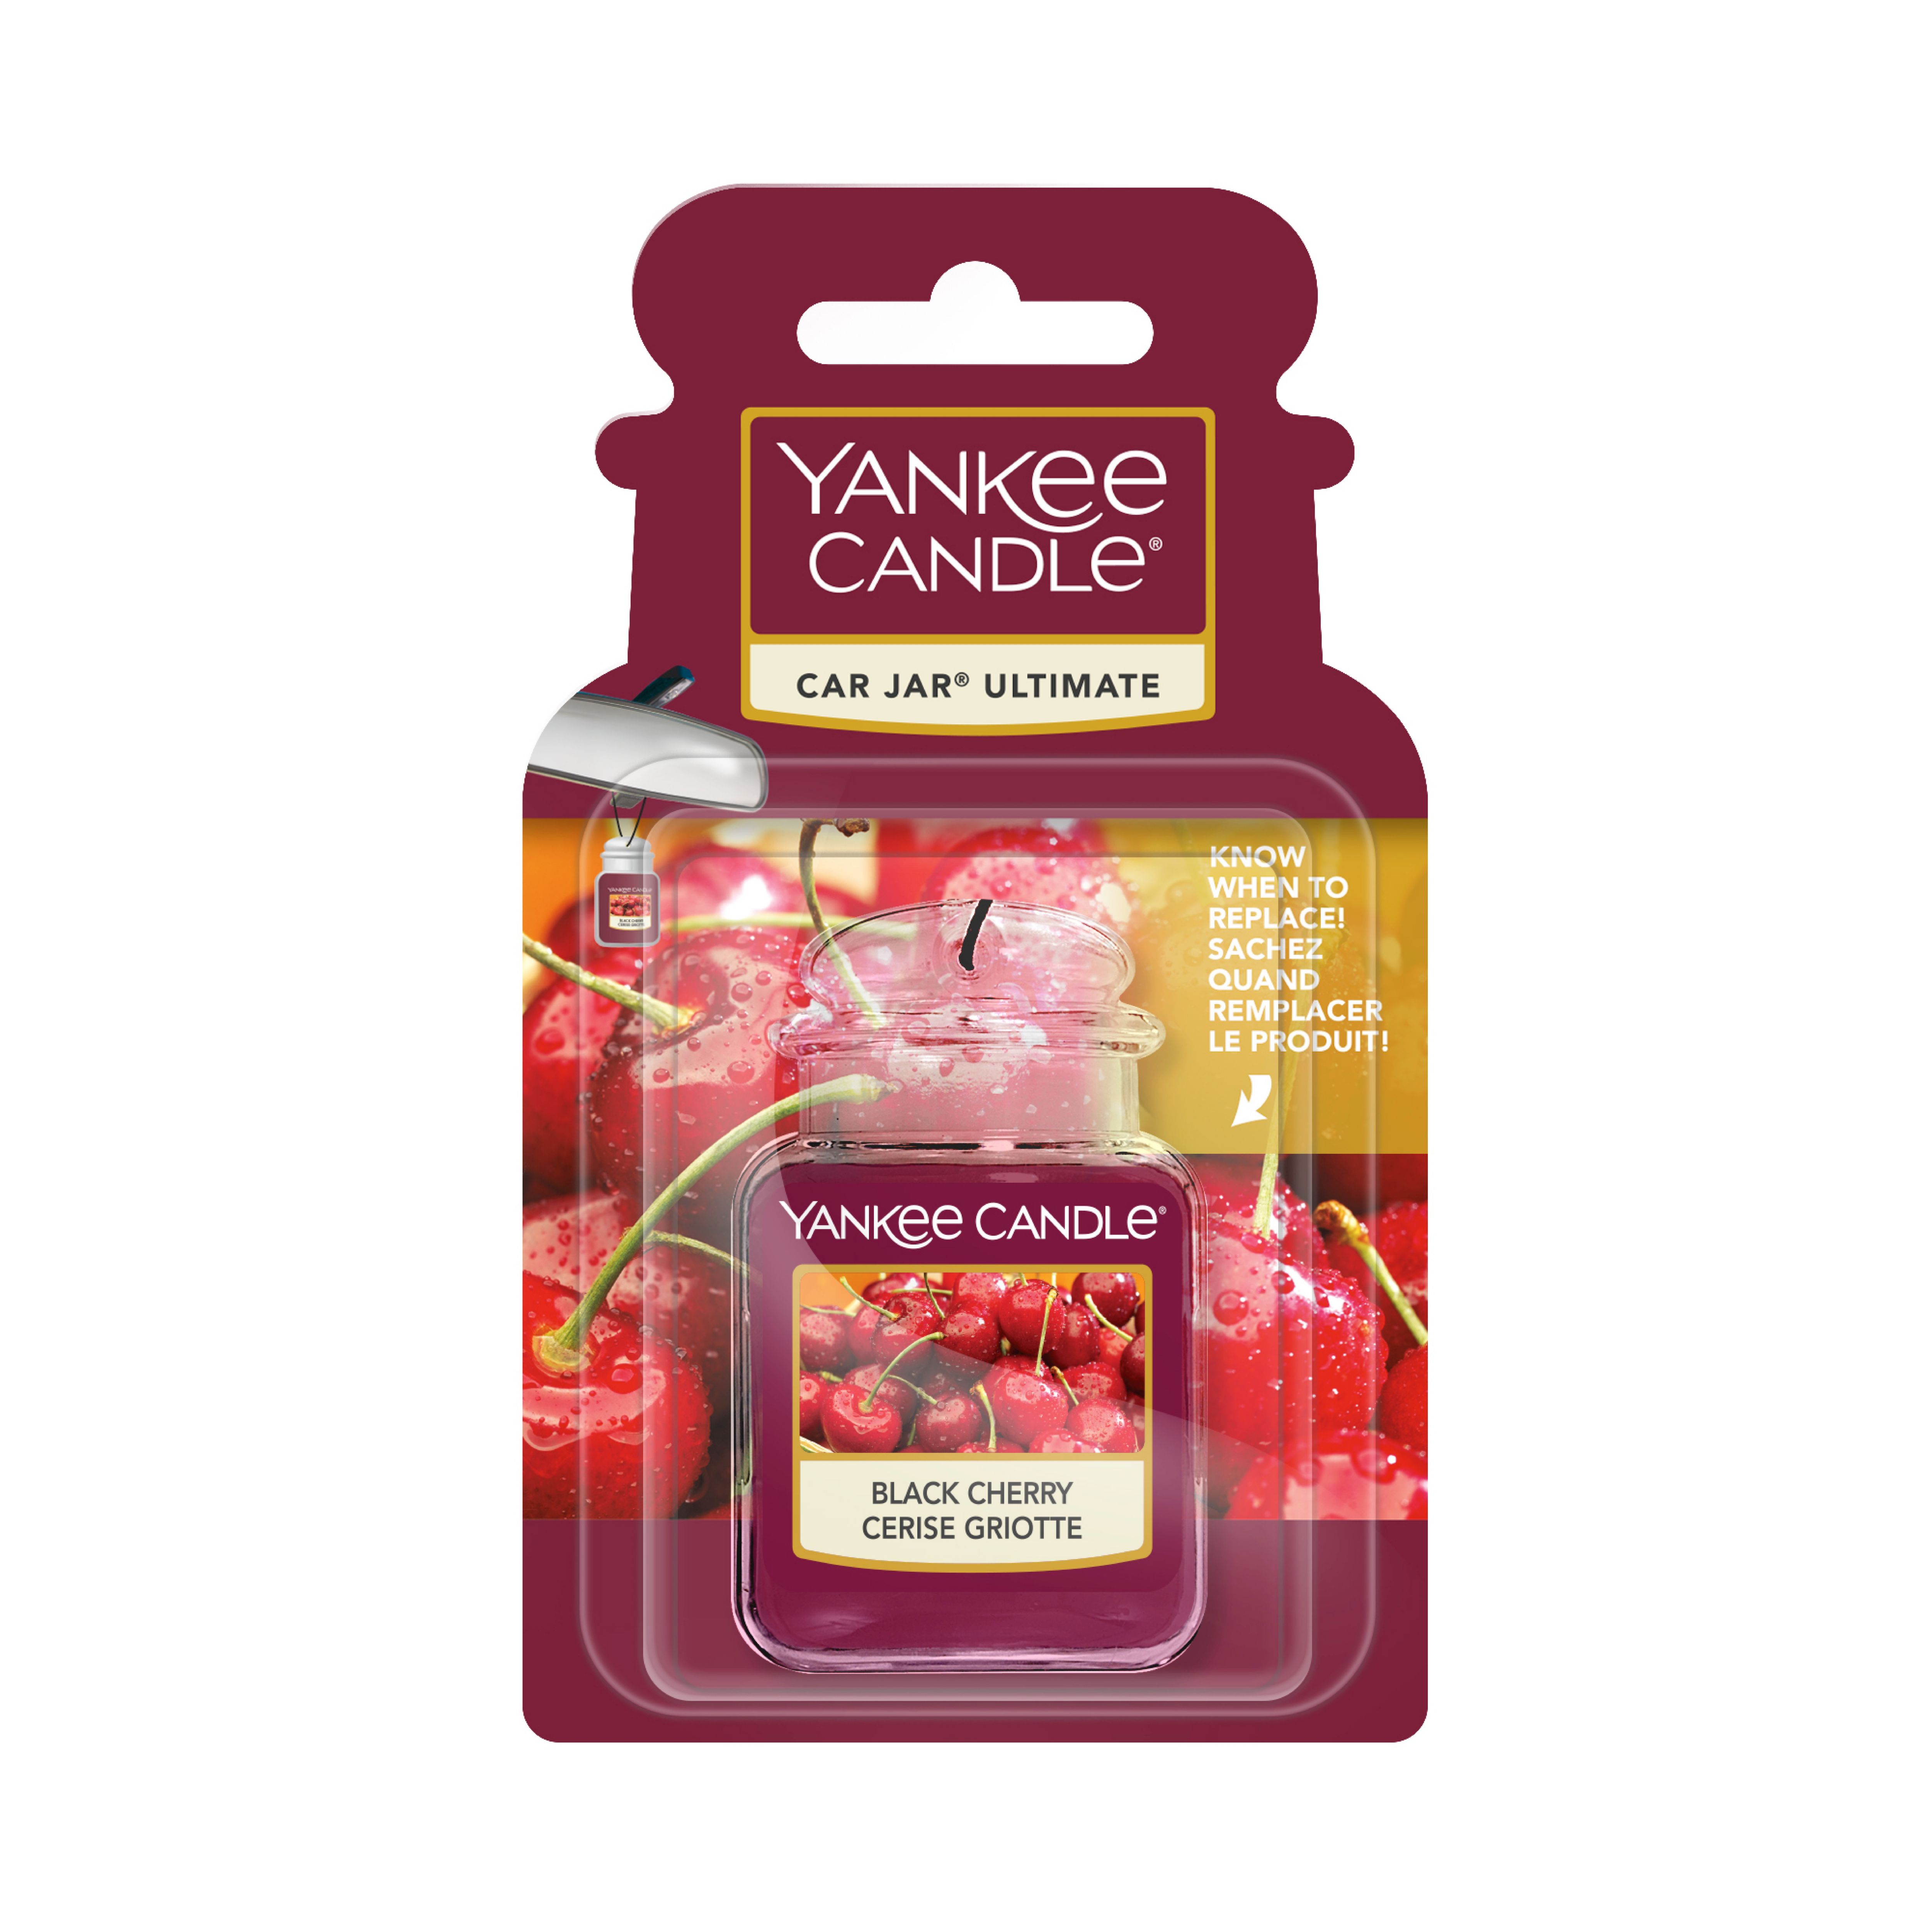 Yankee Candle Car Jar Ultimate Pink Sands Air freshener, 24g